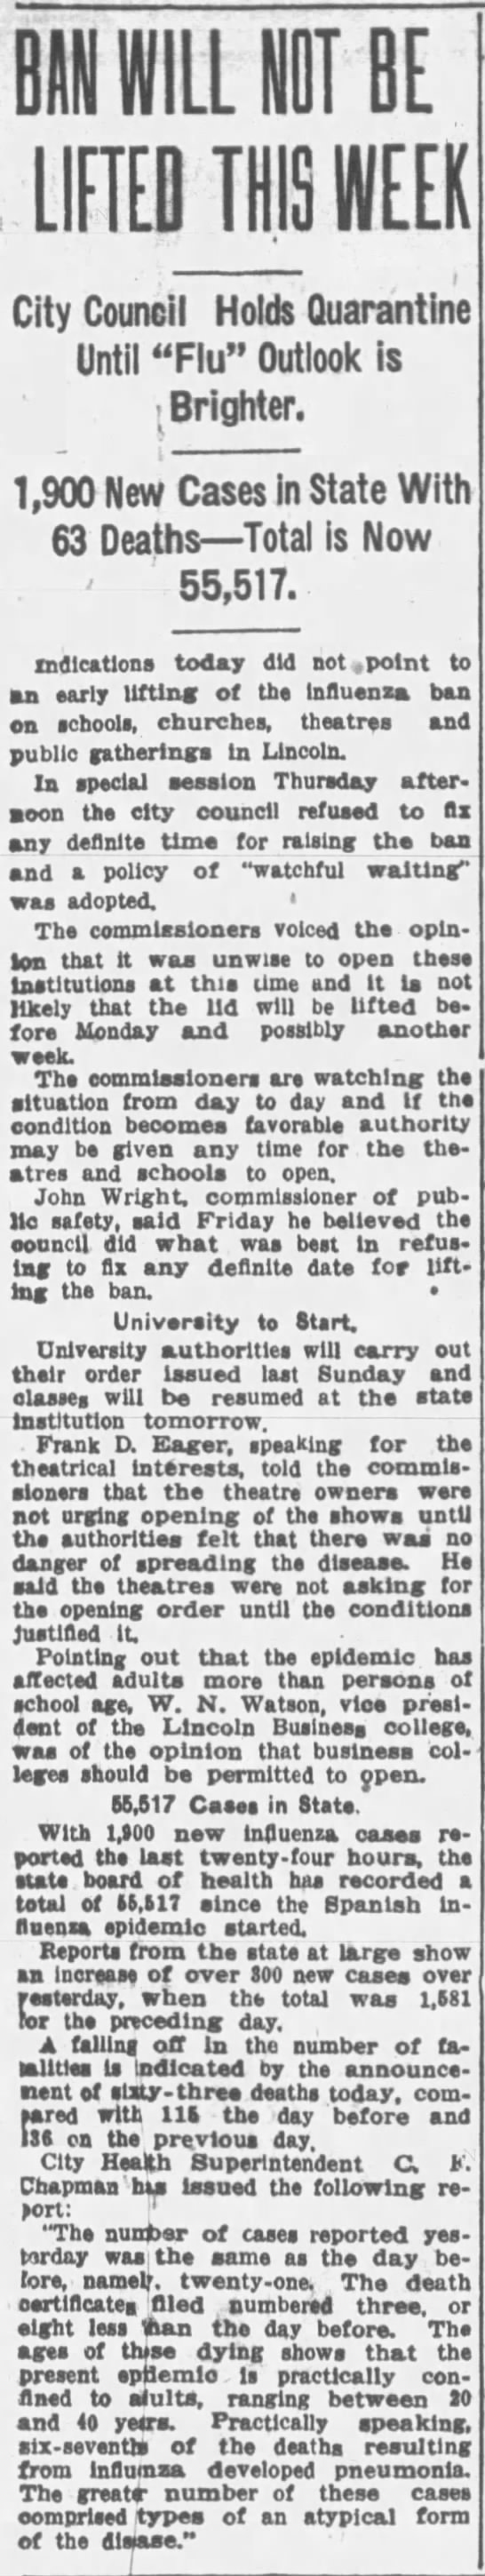 1918 delay in lifting of flu precautions - 